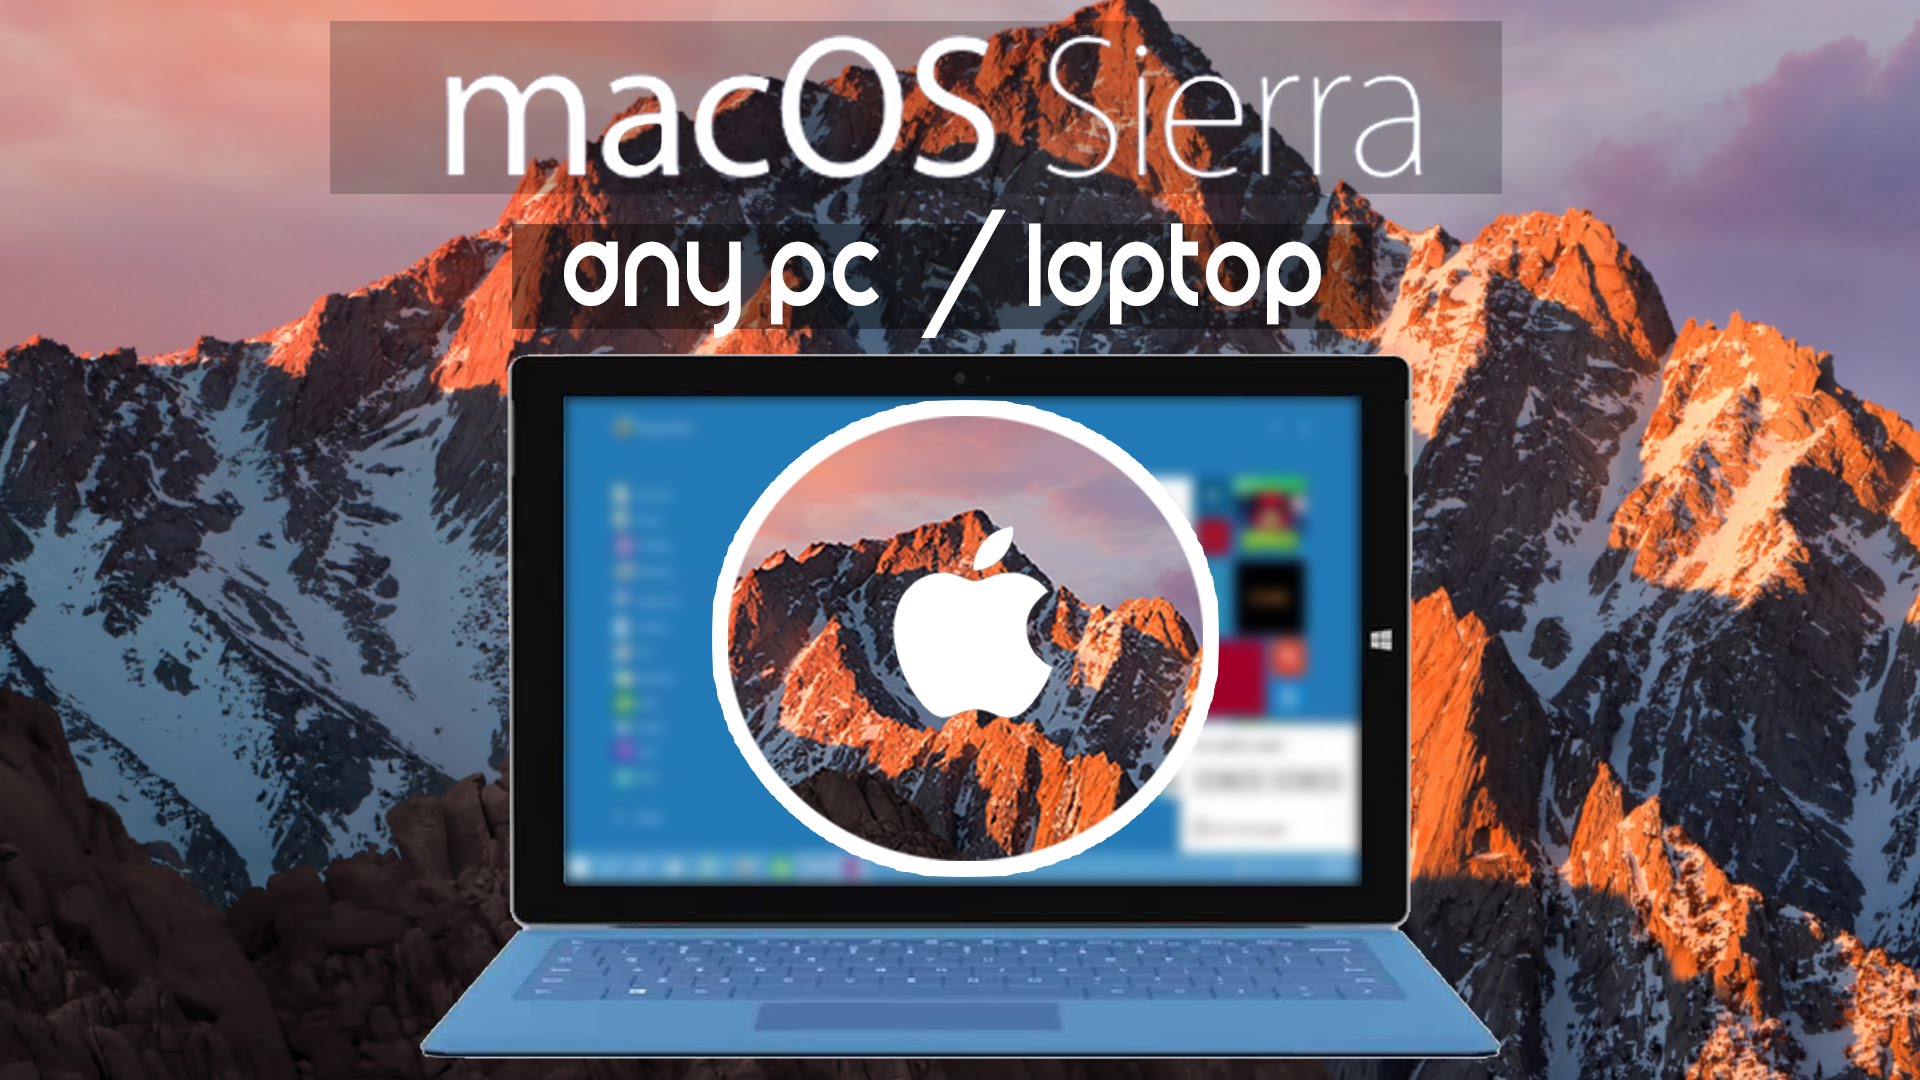 install a torrent game on mac high sierra